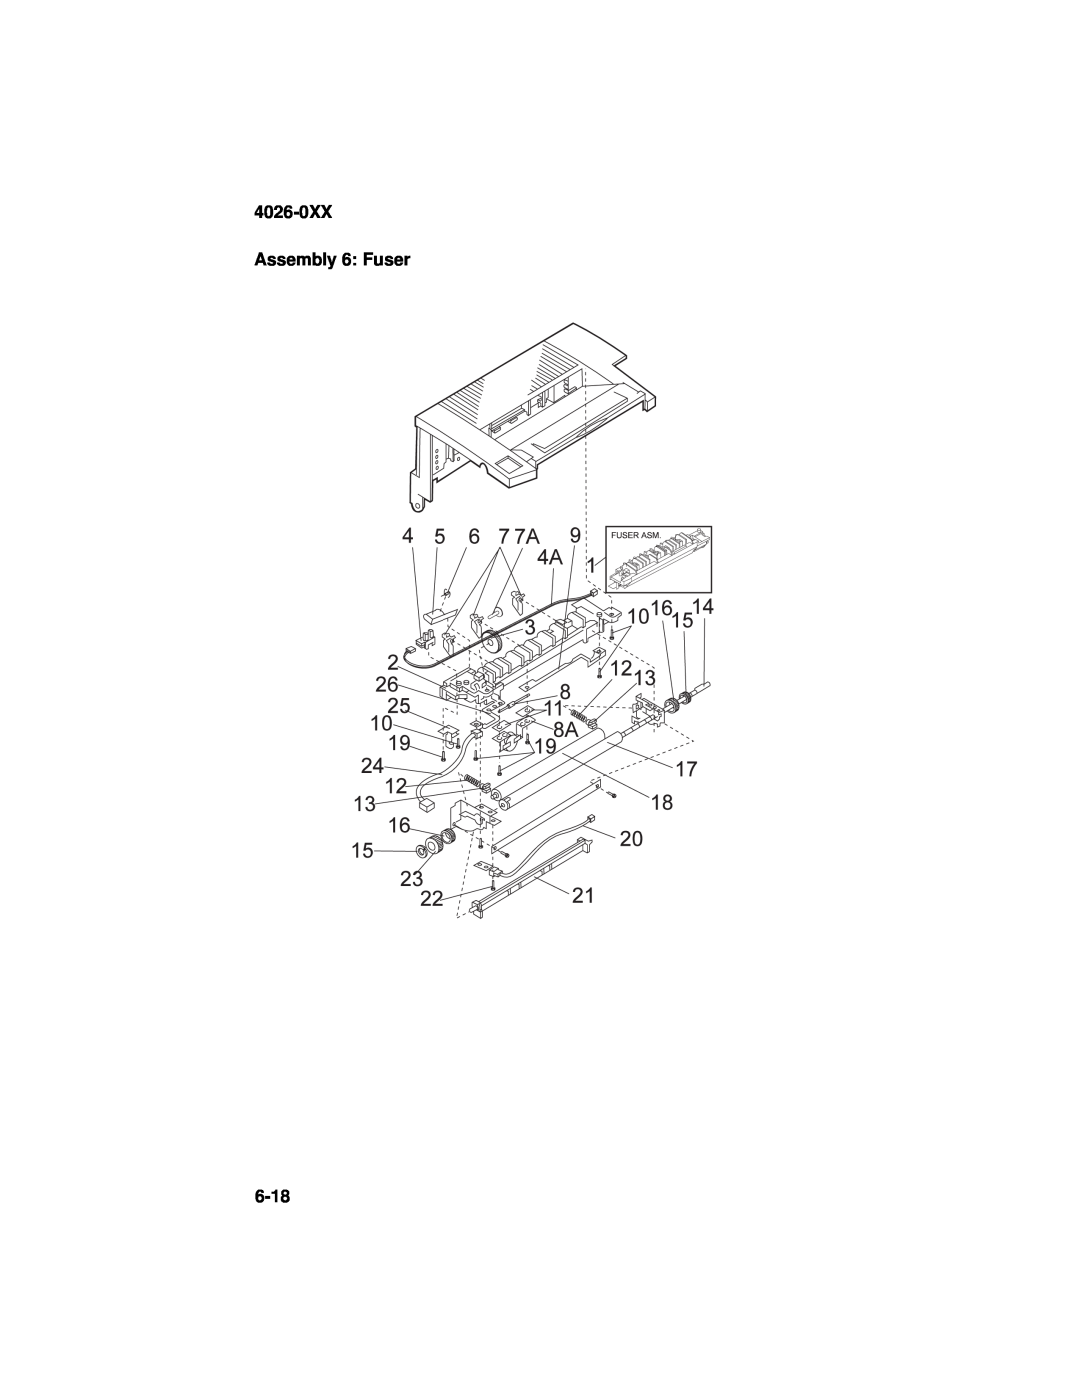 Lexmark OptraTM manual 4026-0XX Assembly 6: Fuser, 6-18 